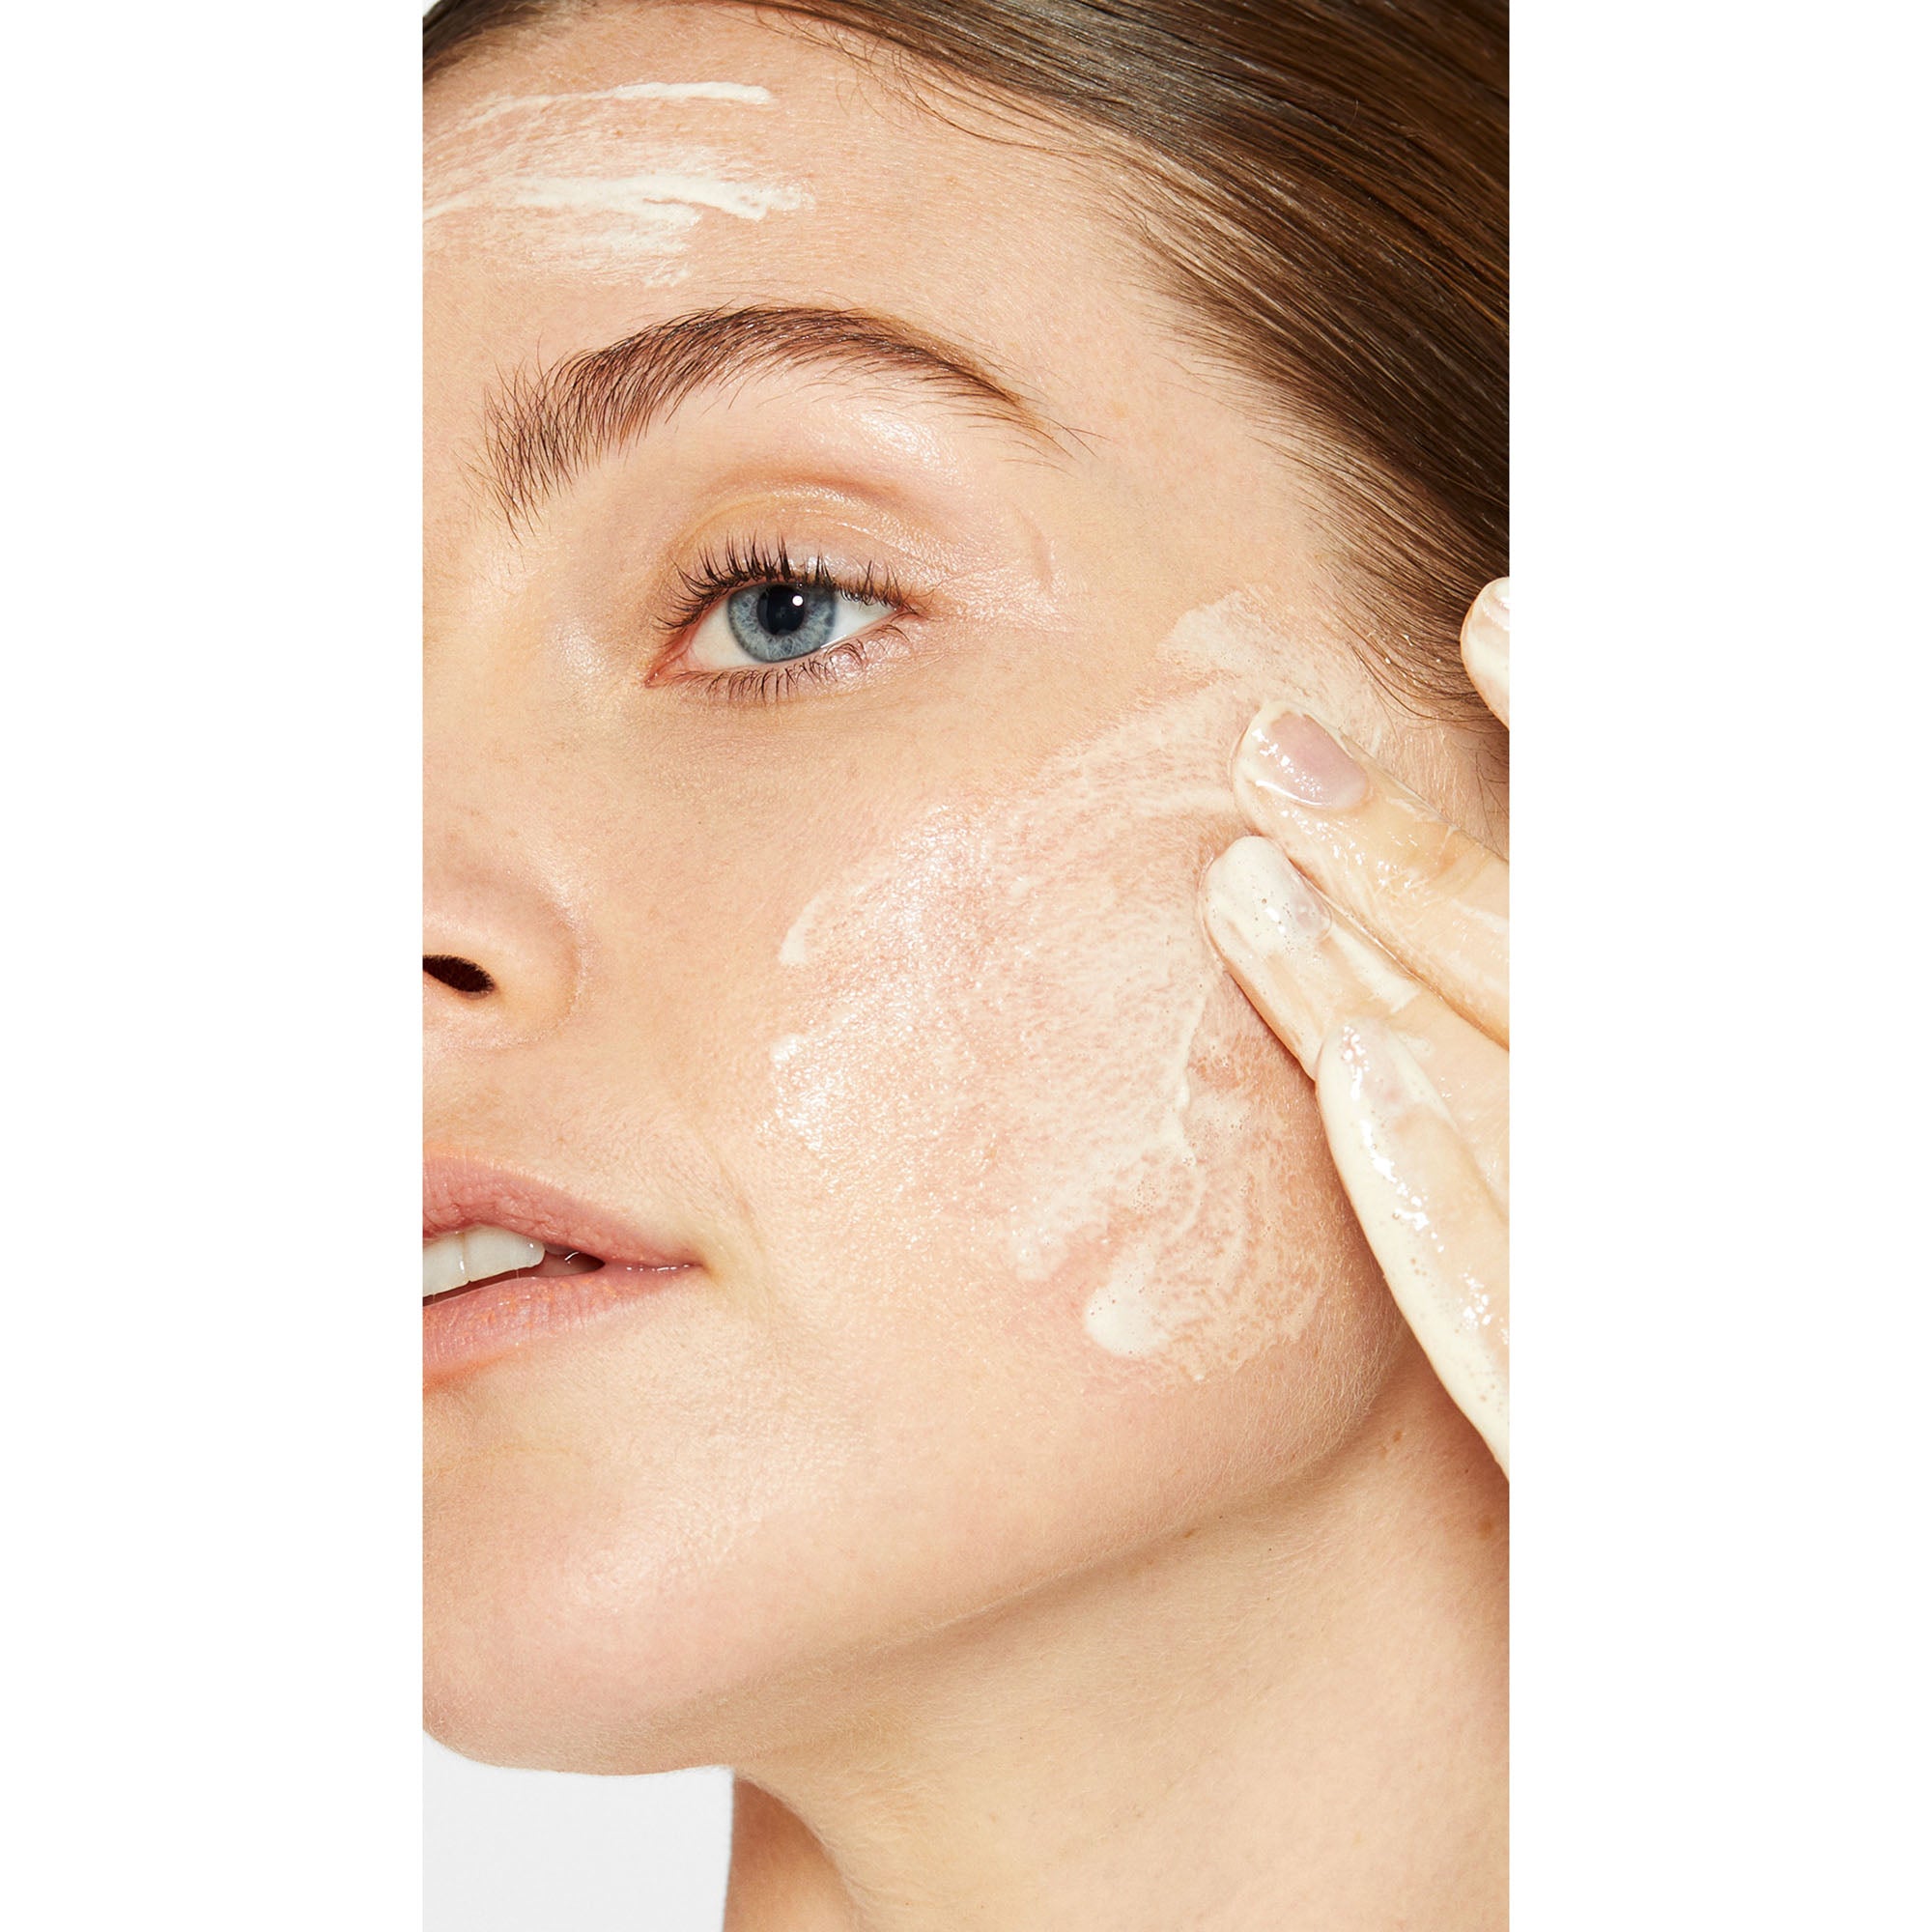 Bioelements Skin Editor - Leave on AHA Chemical Face Peel Creme